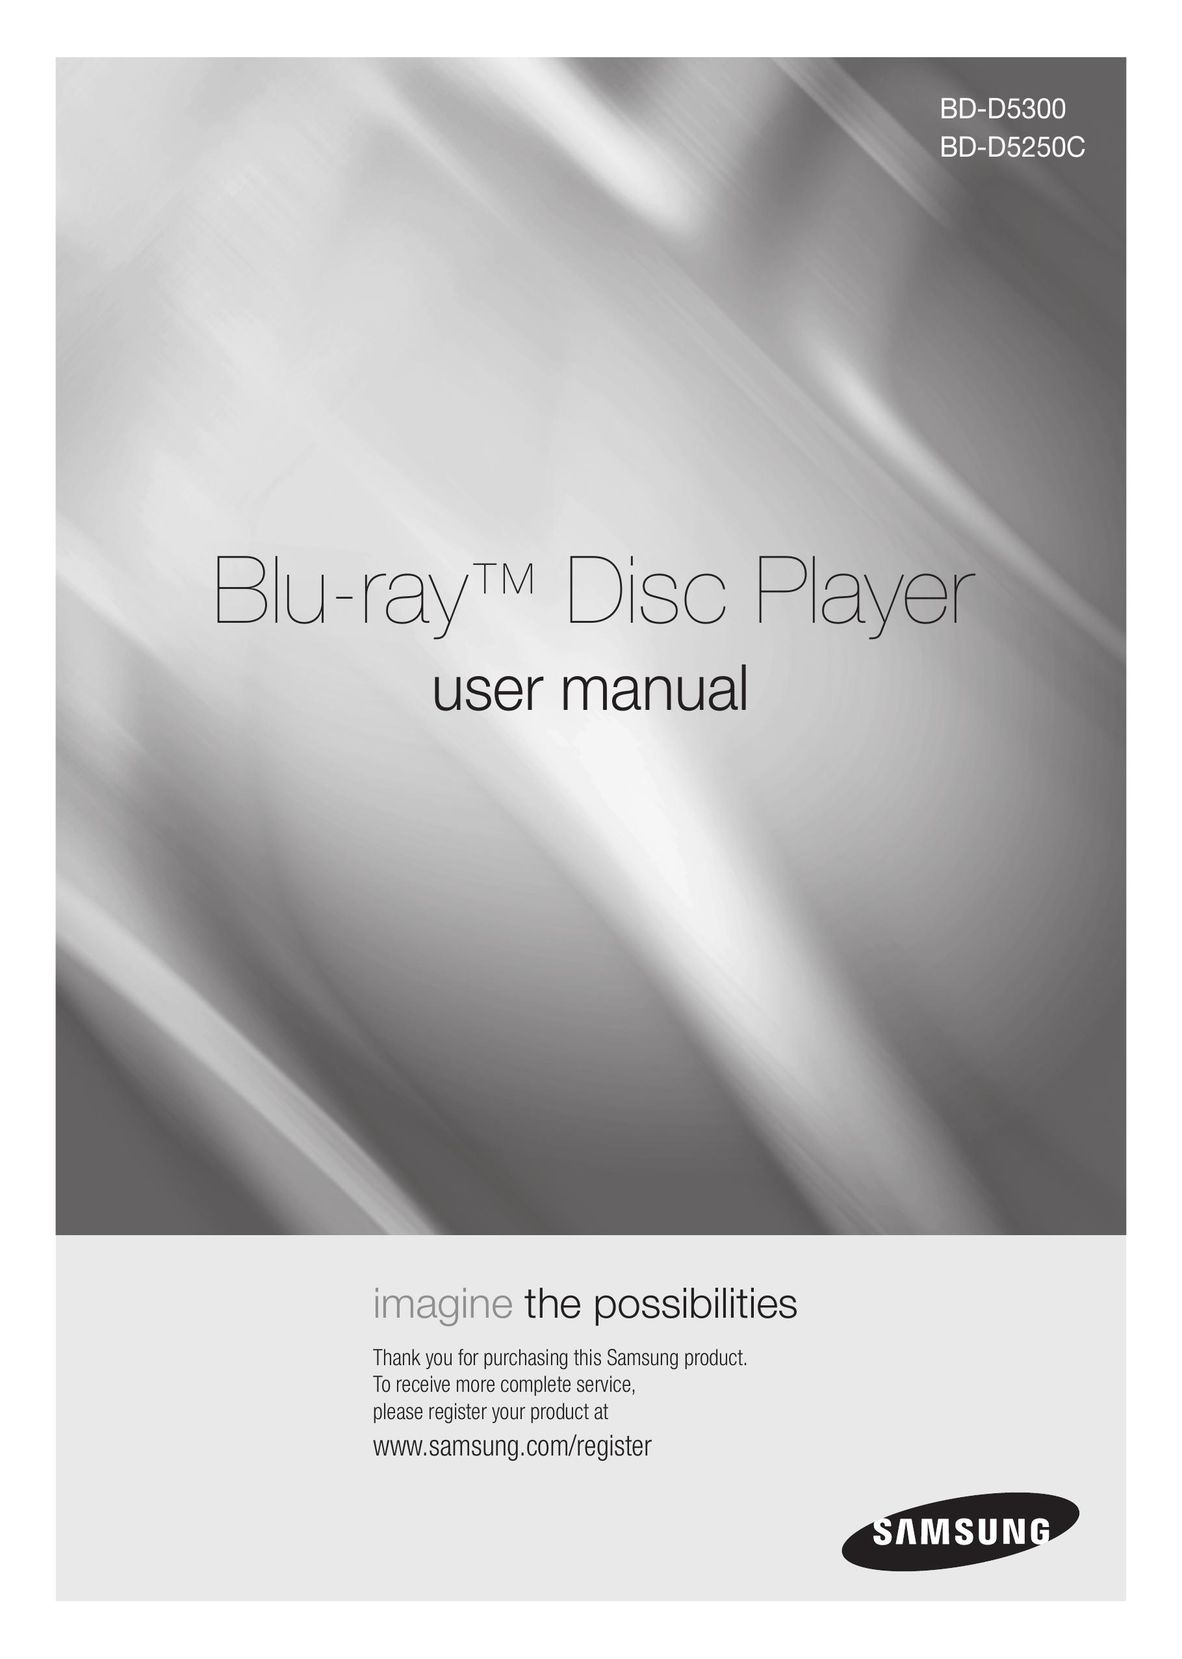 Samsung BD-D5250C Blu-ray Player User Manual